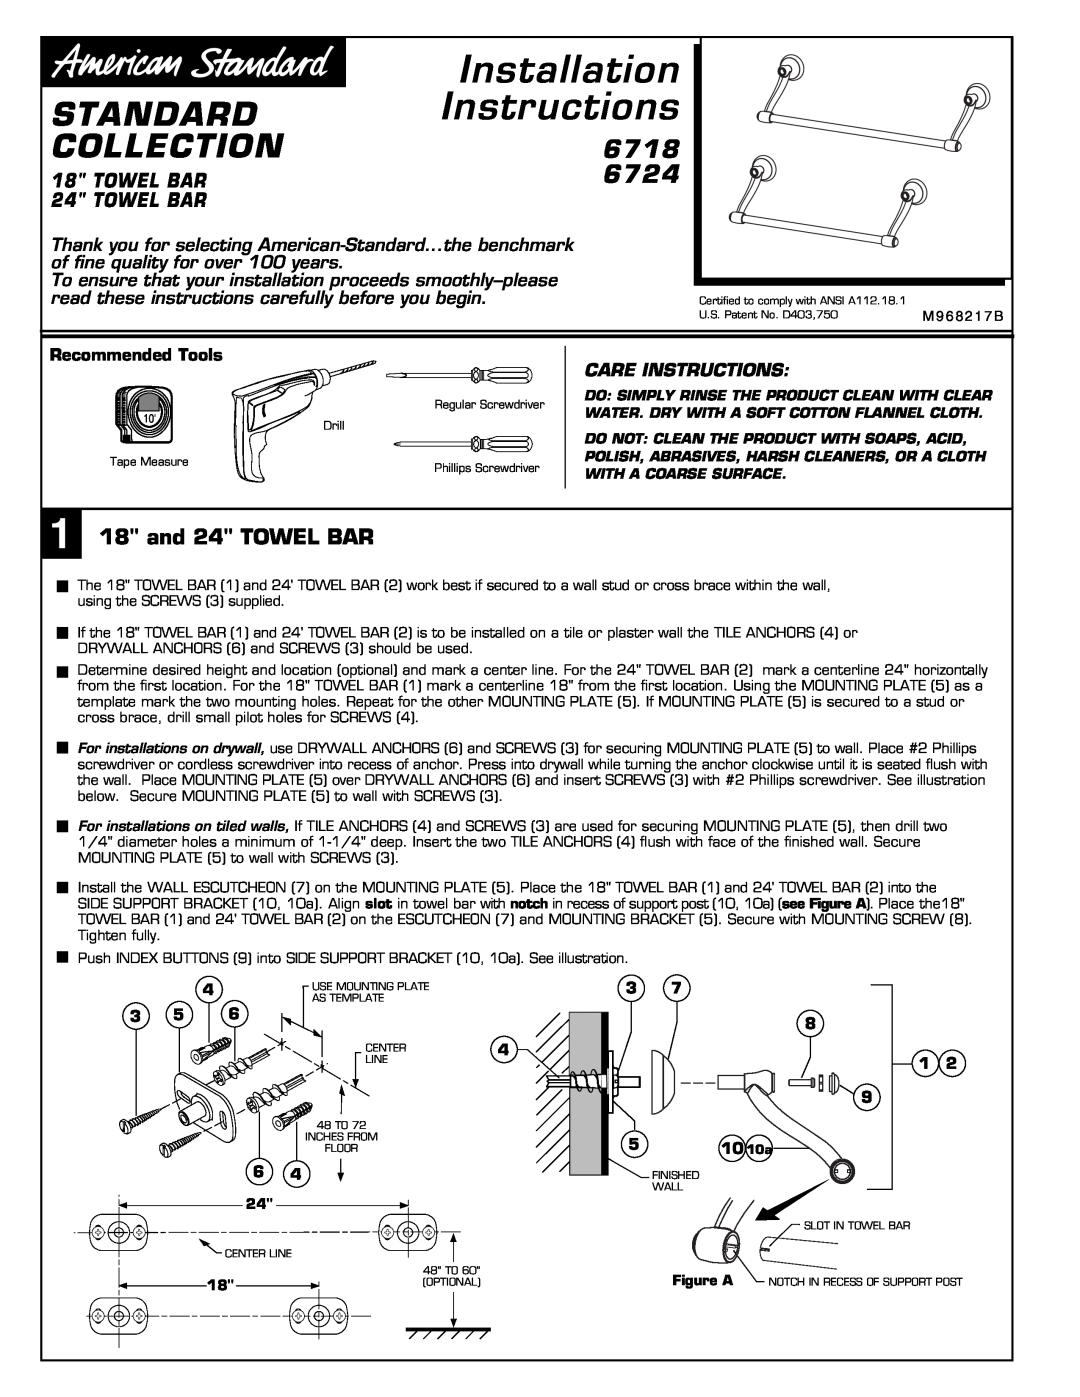 American Standard 6724 installation instructions Standard, Collection, 6718, Towel Bar, Care Instructions, Installation 